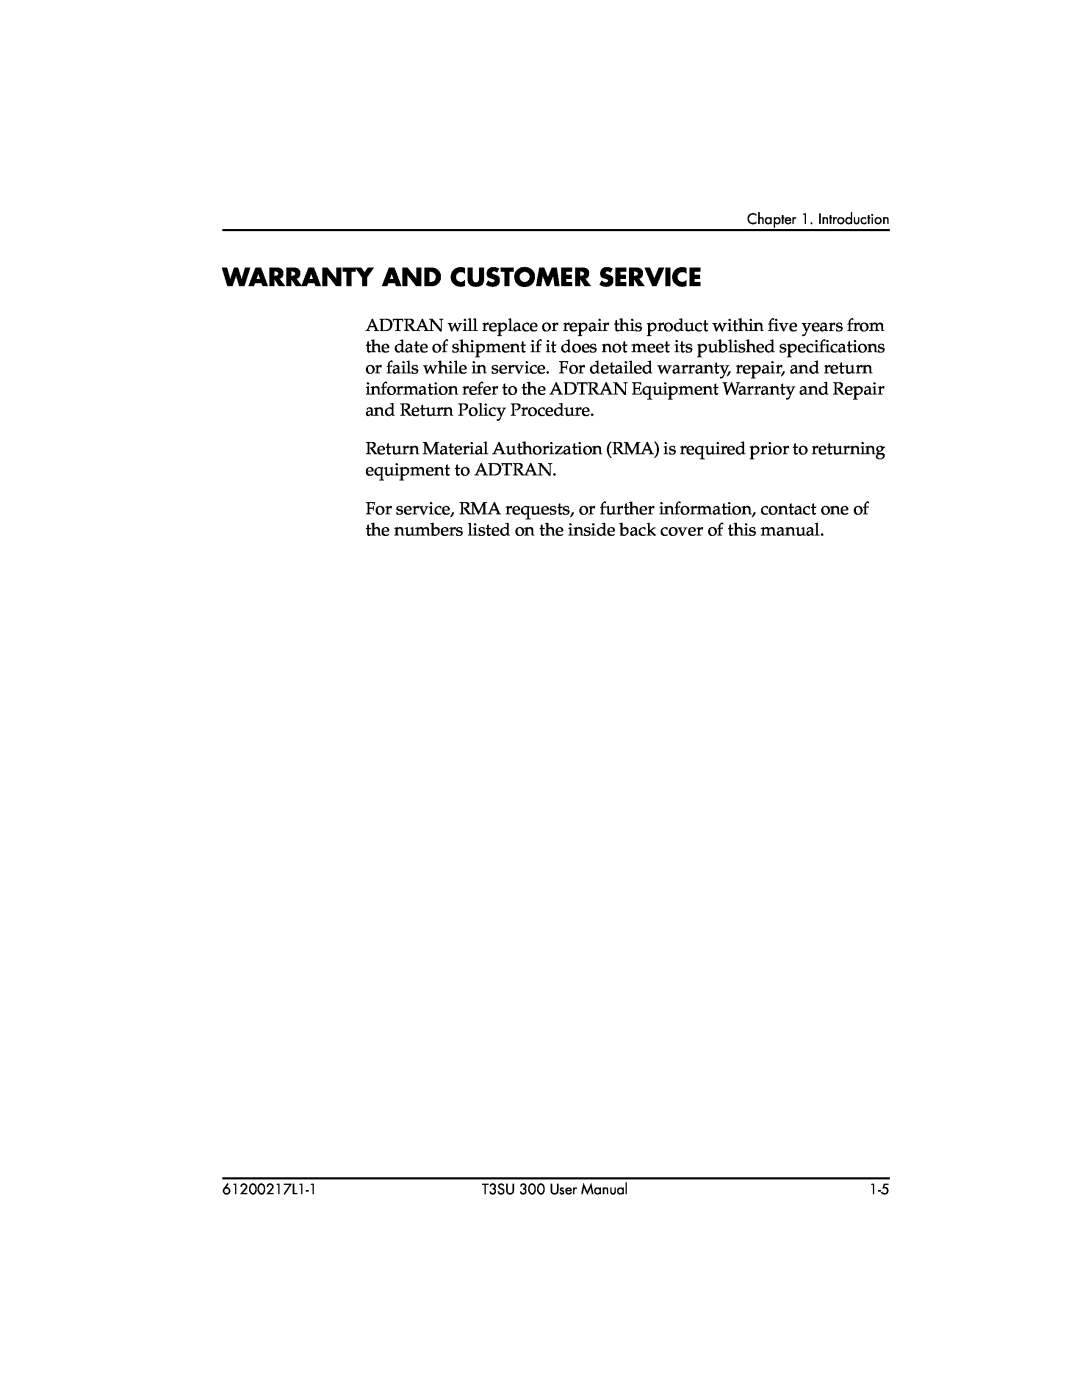 ADTRAN T3SU 300 user manual Warranty And Customer Service 